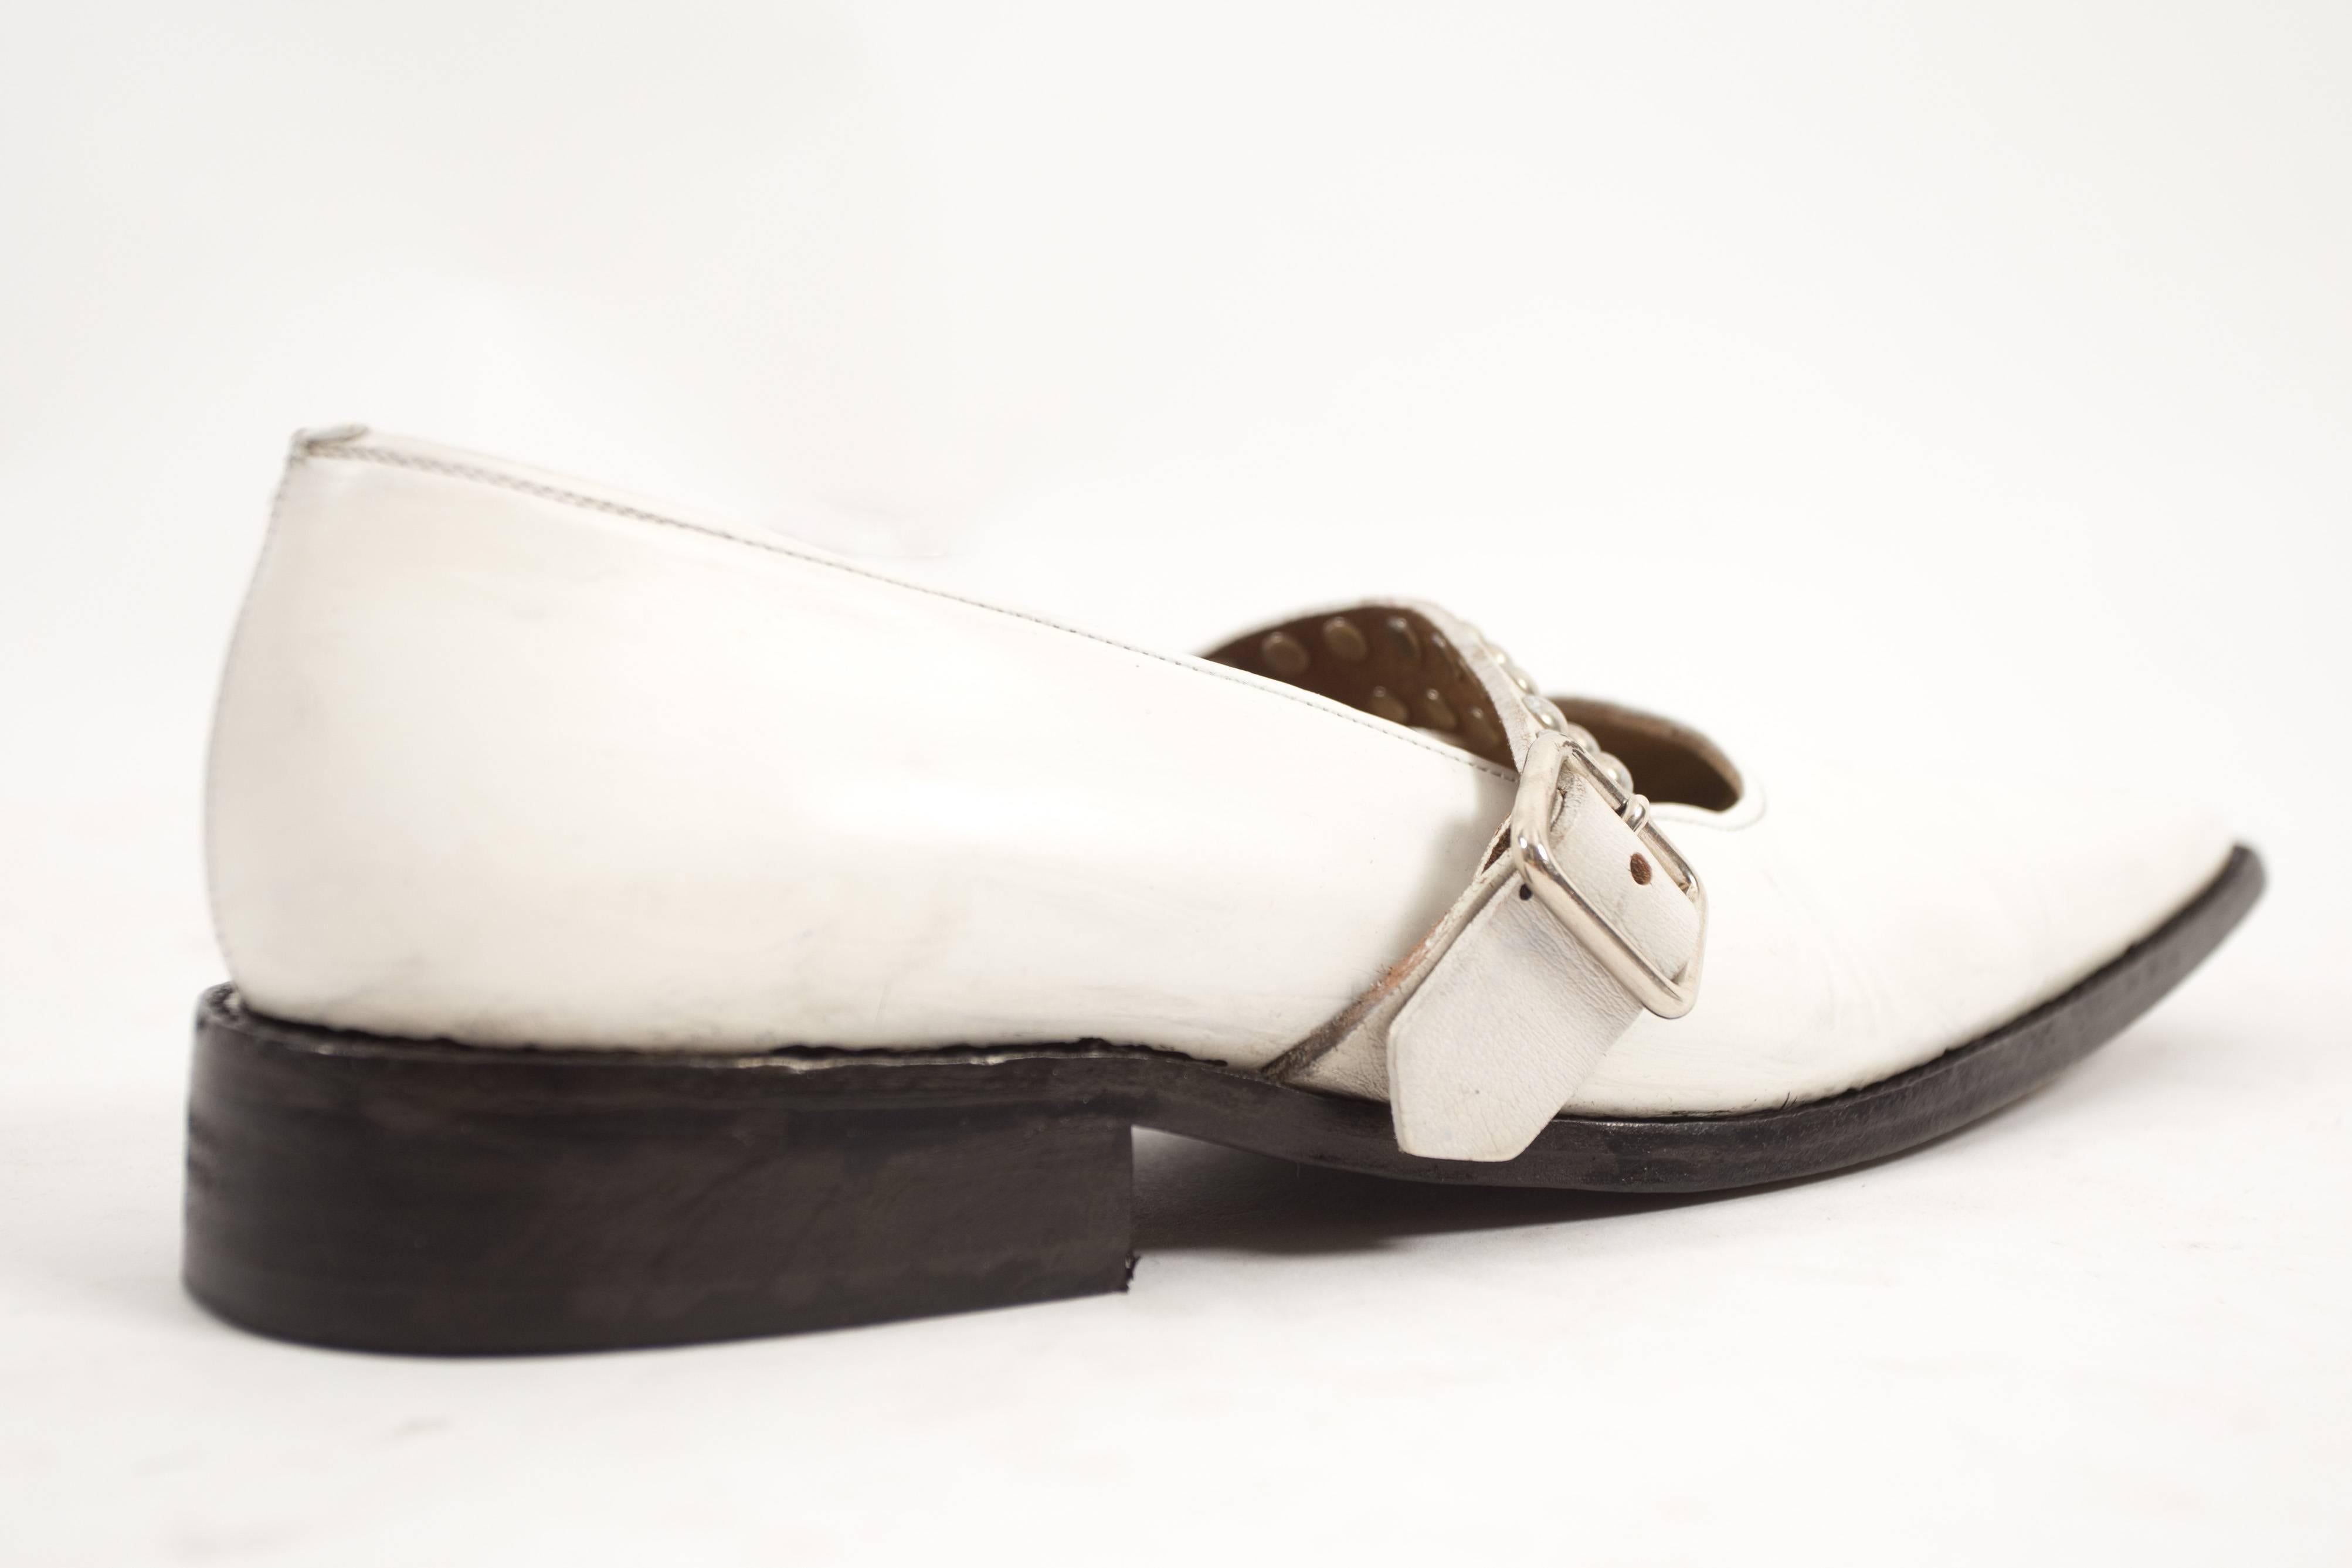 Women's Comme des Garcons Autumn-Winter 2000 white leather studded square toe shoes